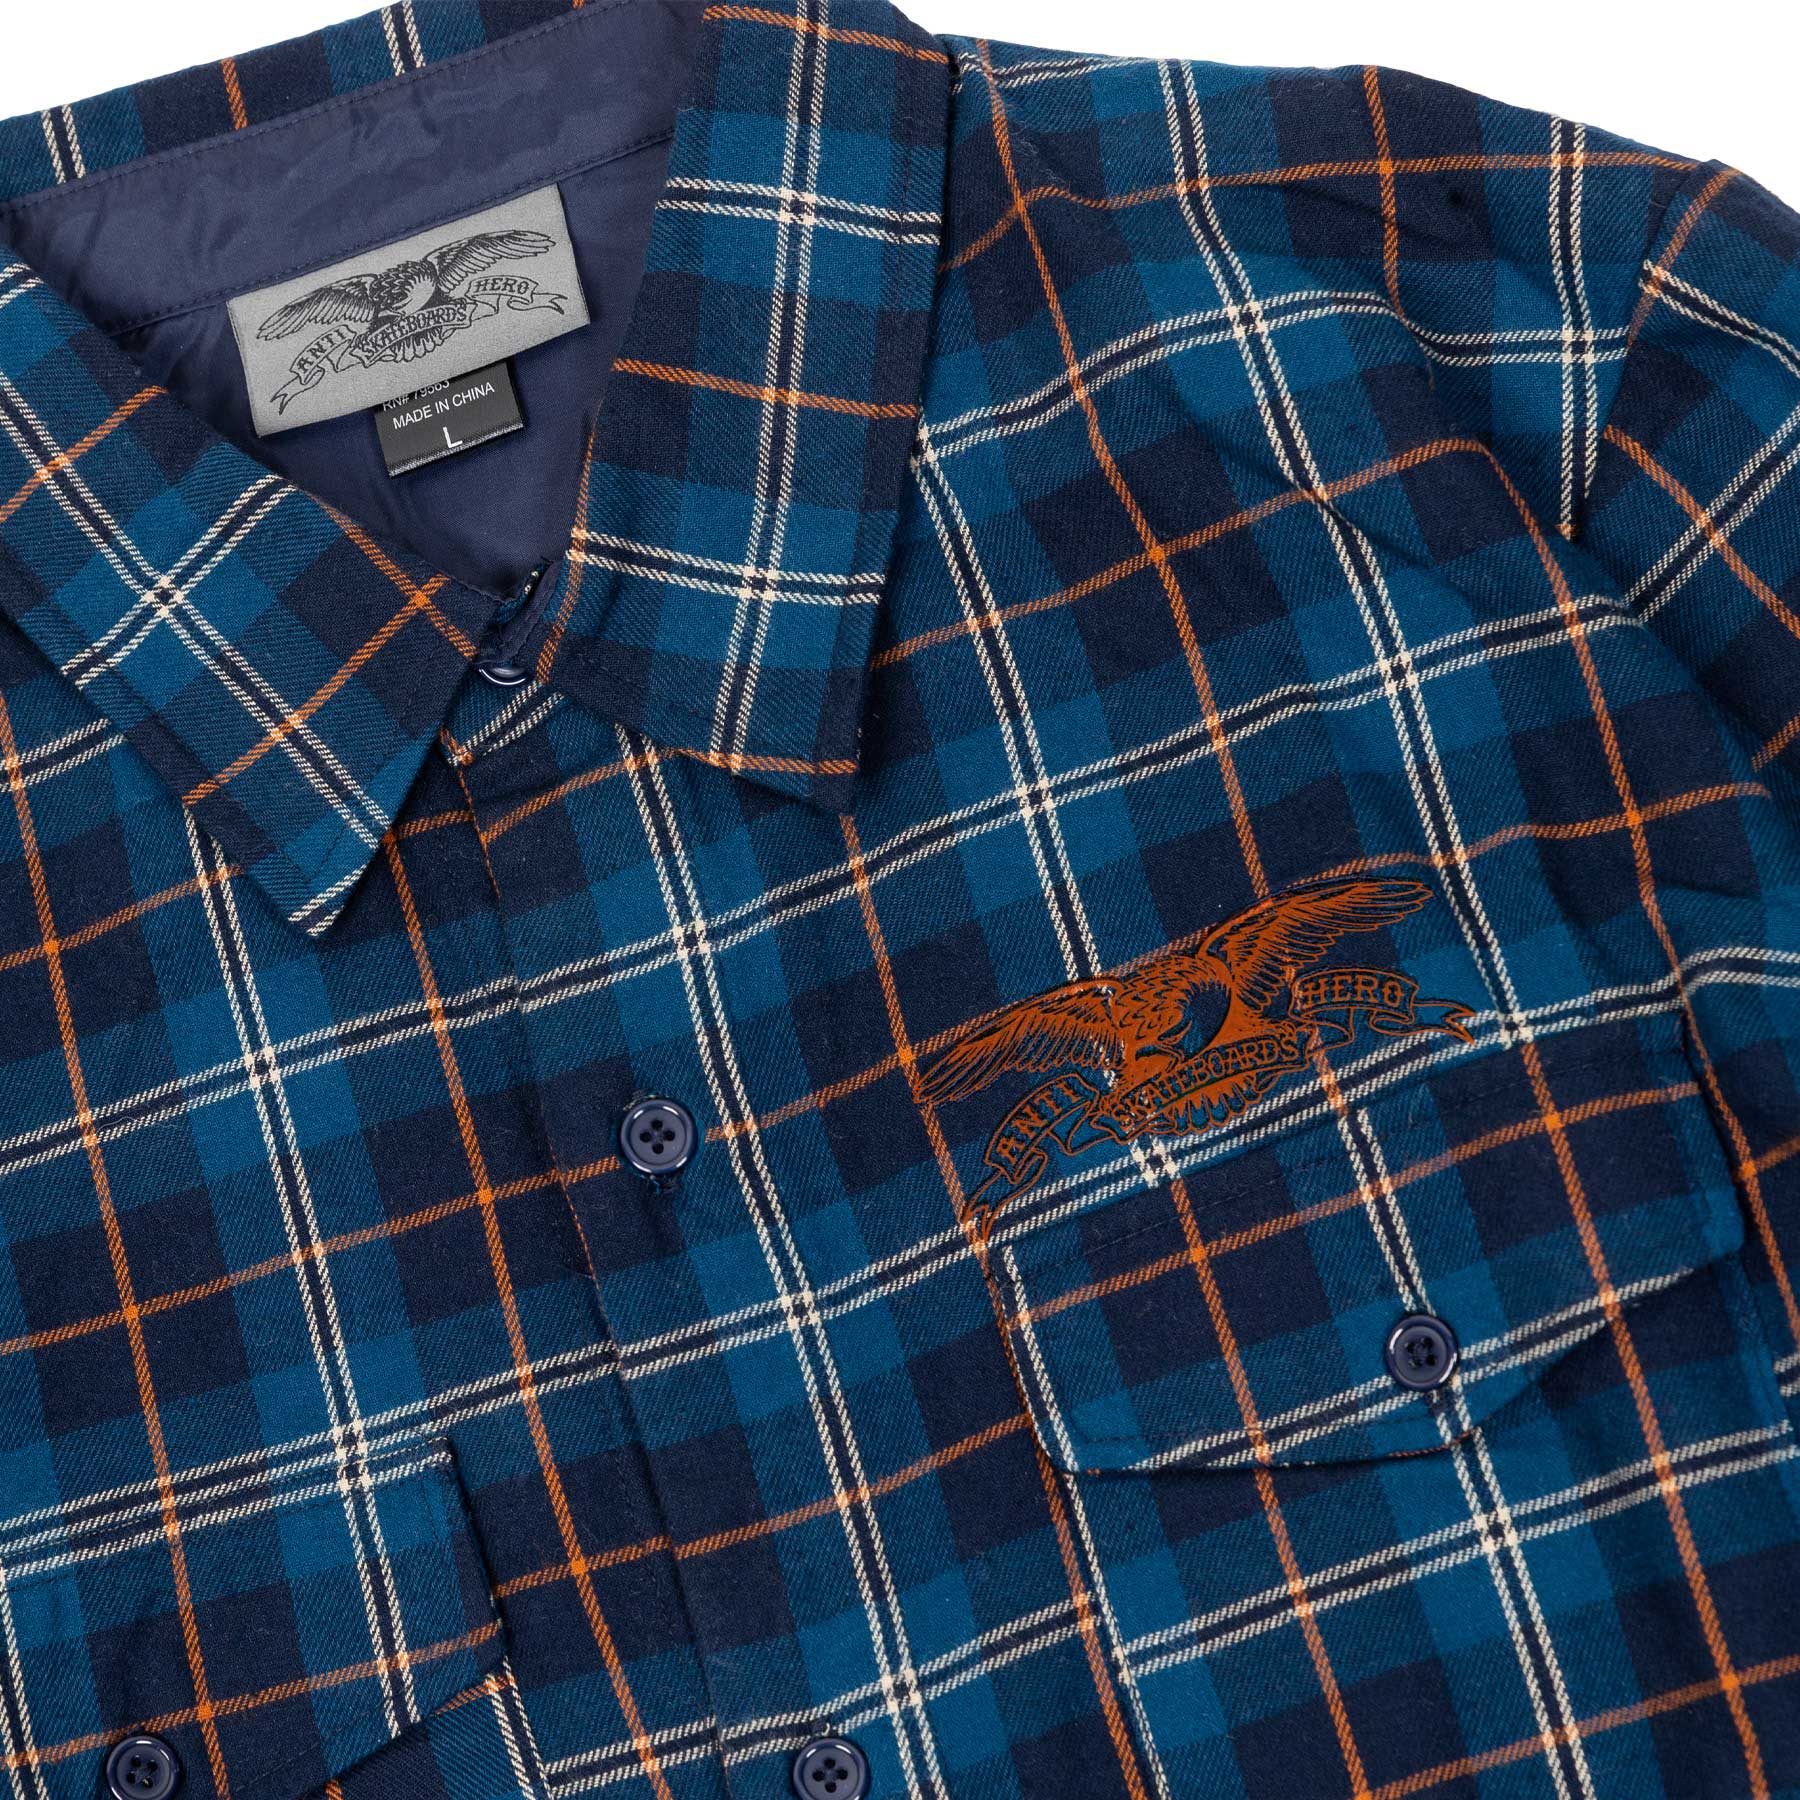 Antihero Basic Eagle Flannel Shirt Custom Shirt, multi color w/ orange embroidery - Tiki Room Skateboards - 3